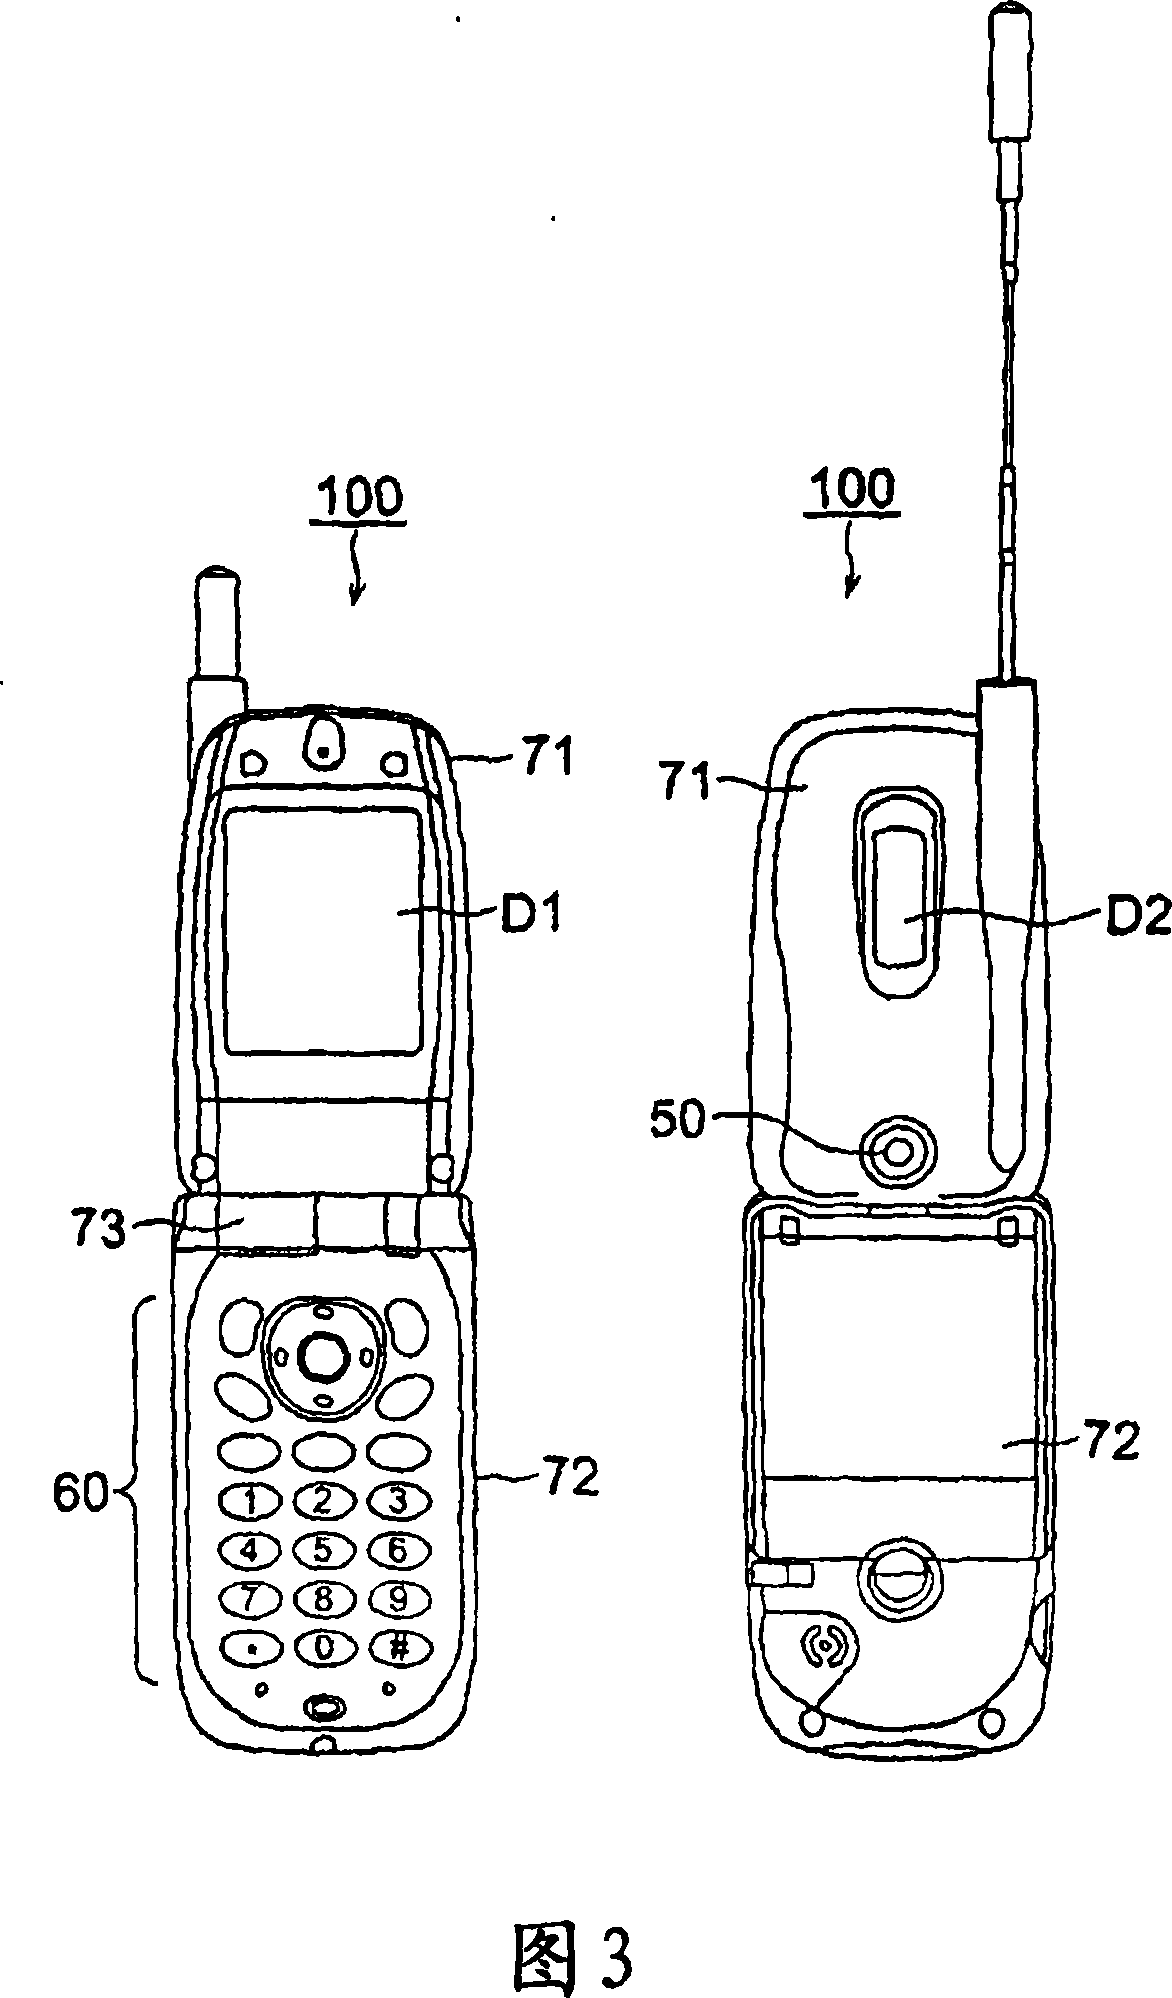 Image pickup lens, image pickup apparatus, and mobile terminal